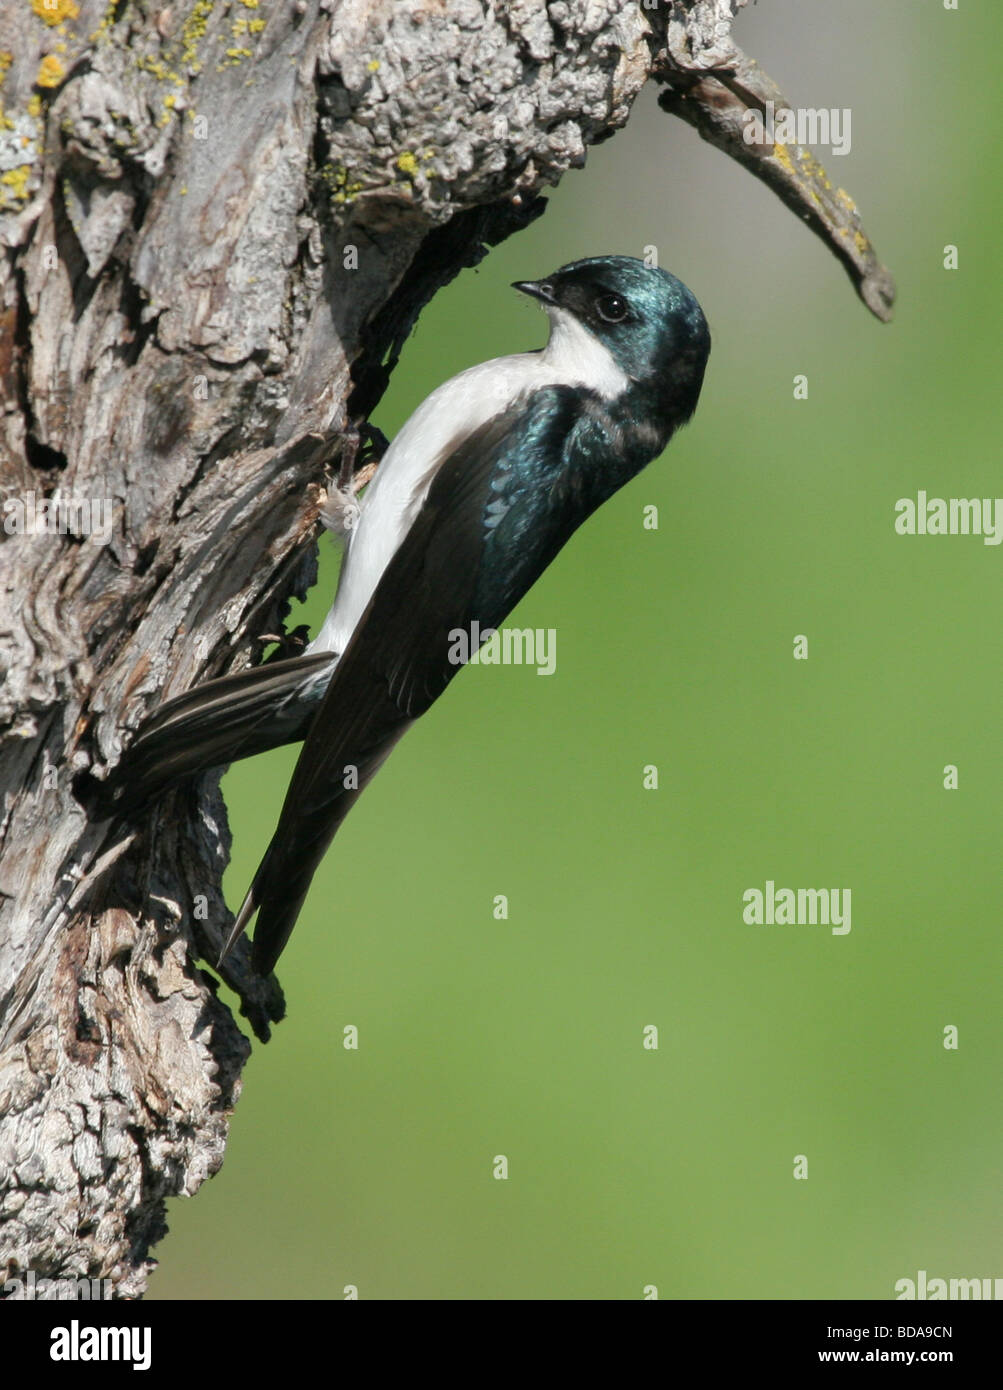 Swallow bird on a tree Stock Photo